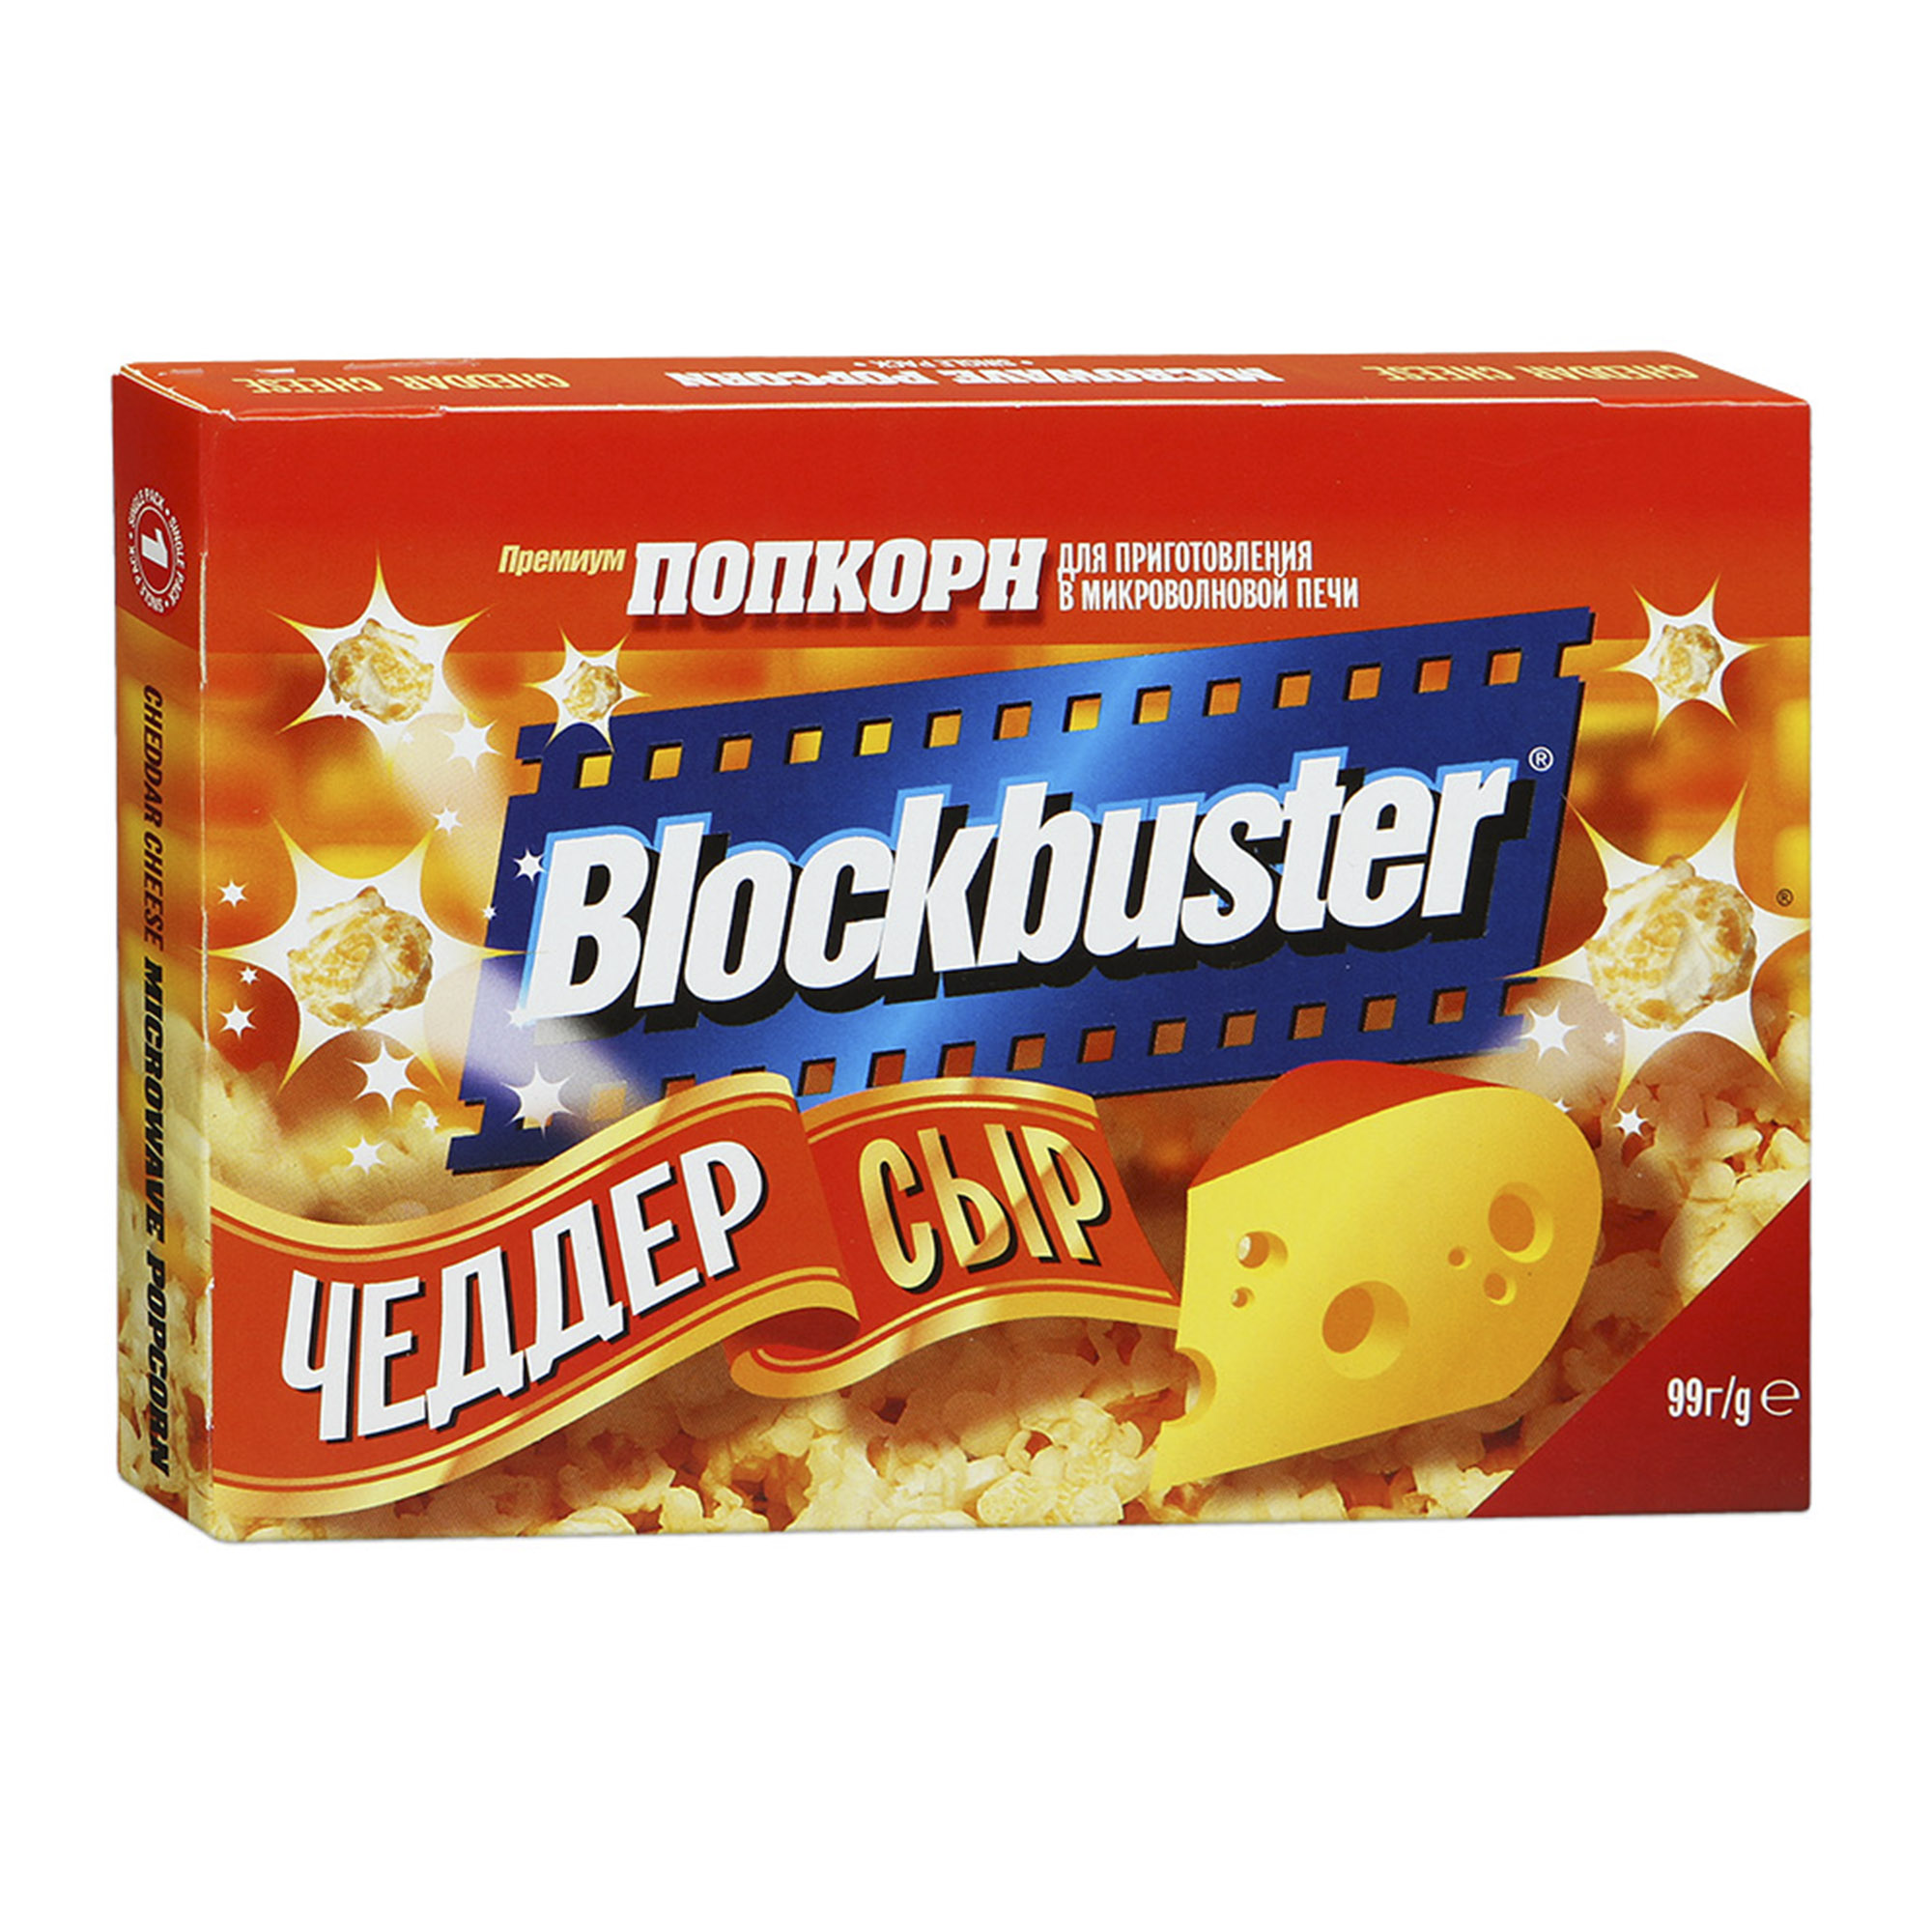 Попкорн Blockbuster с сыром Чеддер 90 г попкорн blockbuster экстра масло 99 г